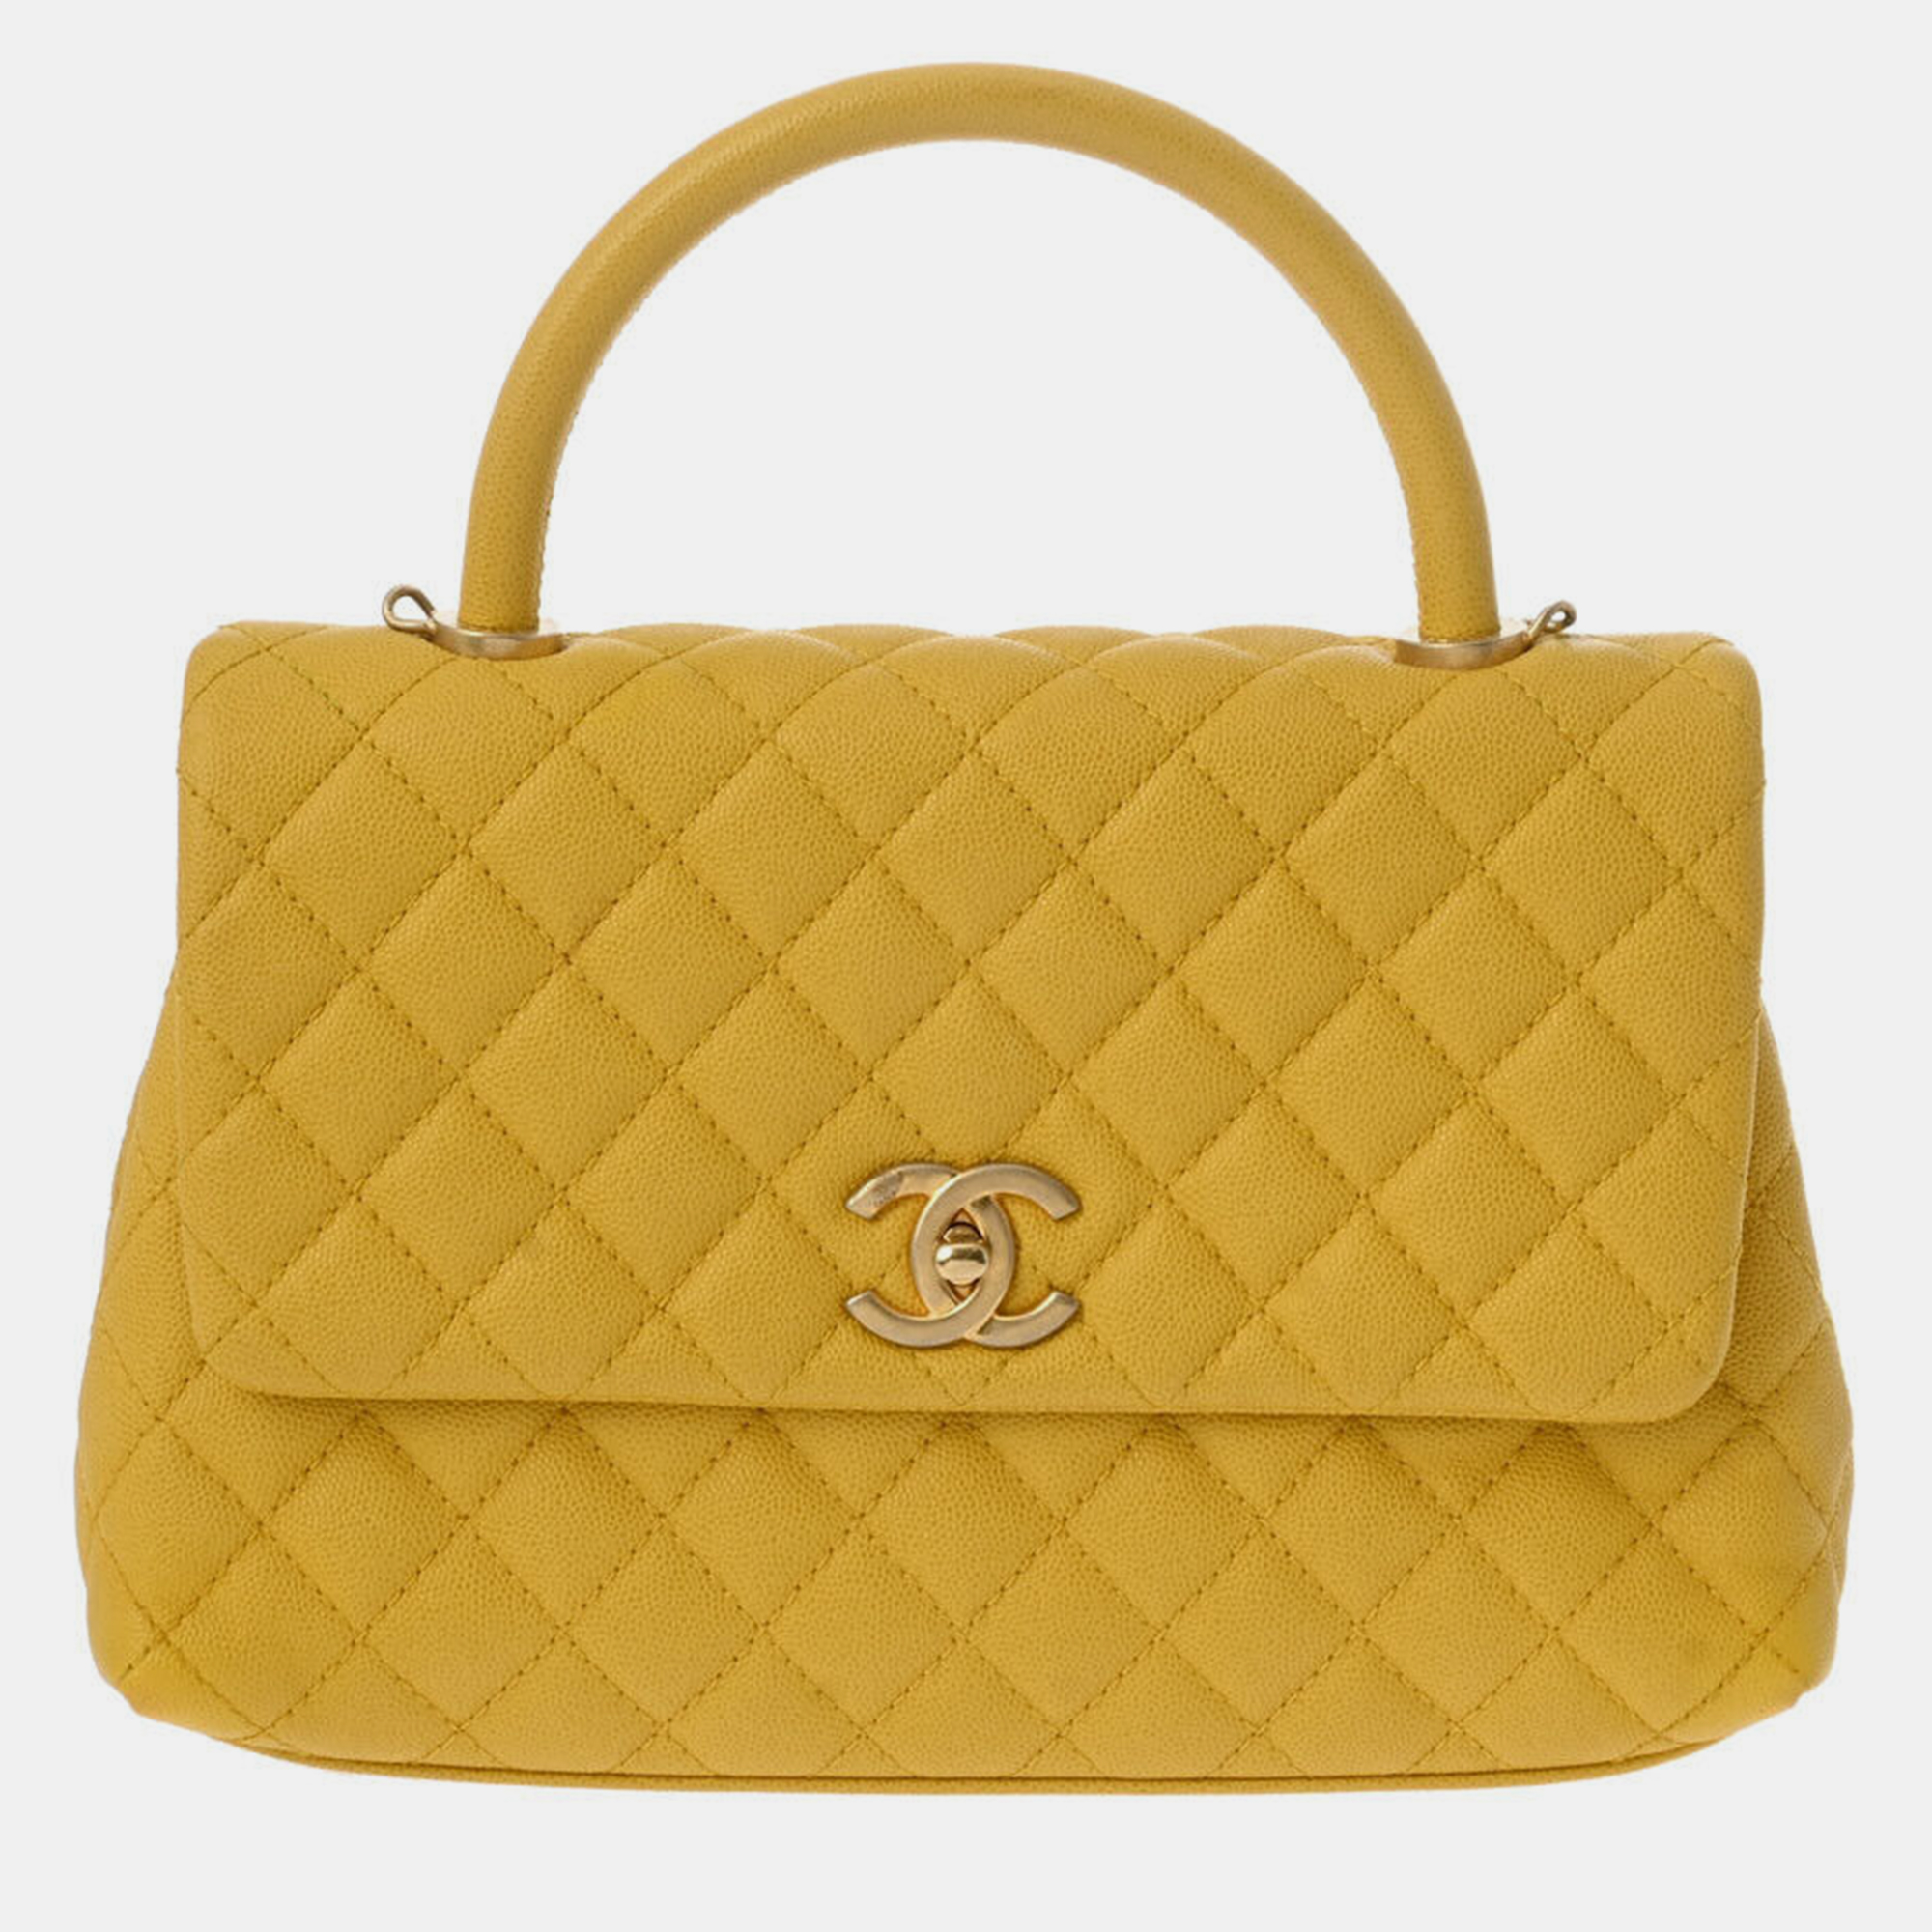 Chanel yellow caviar leather coco top handle bag